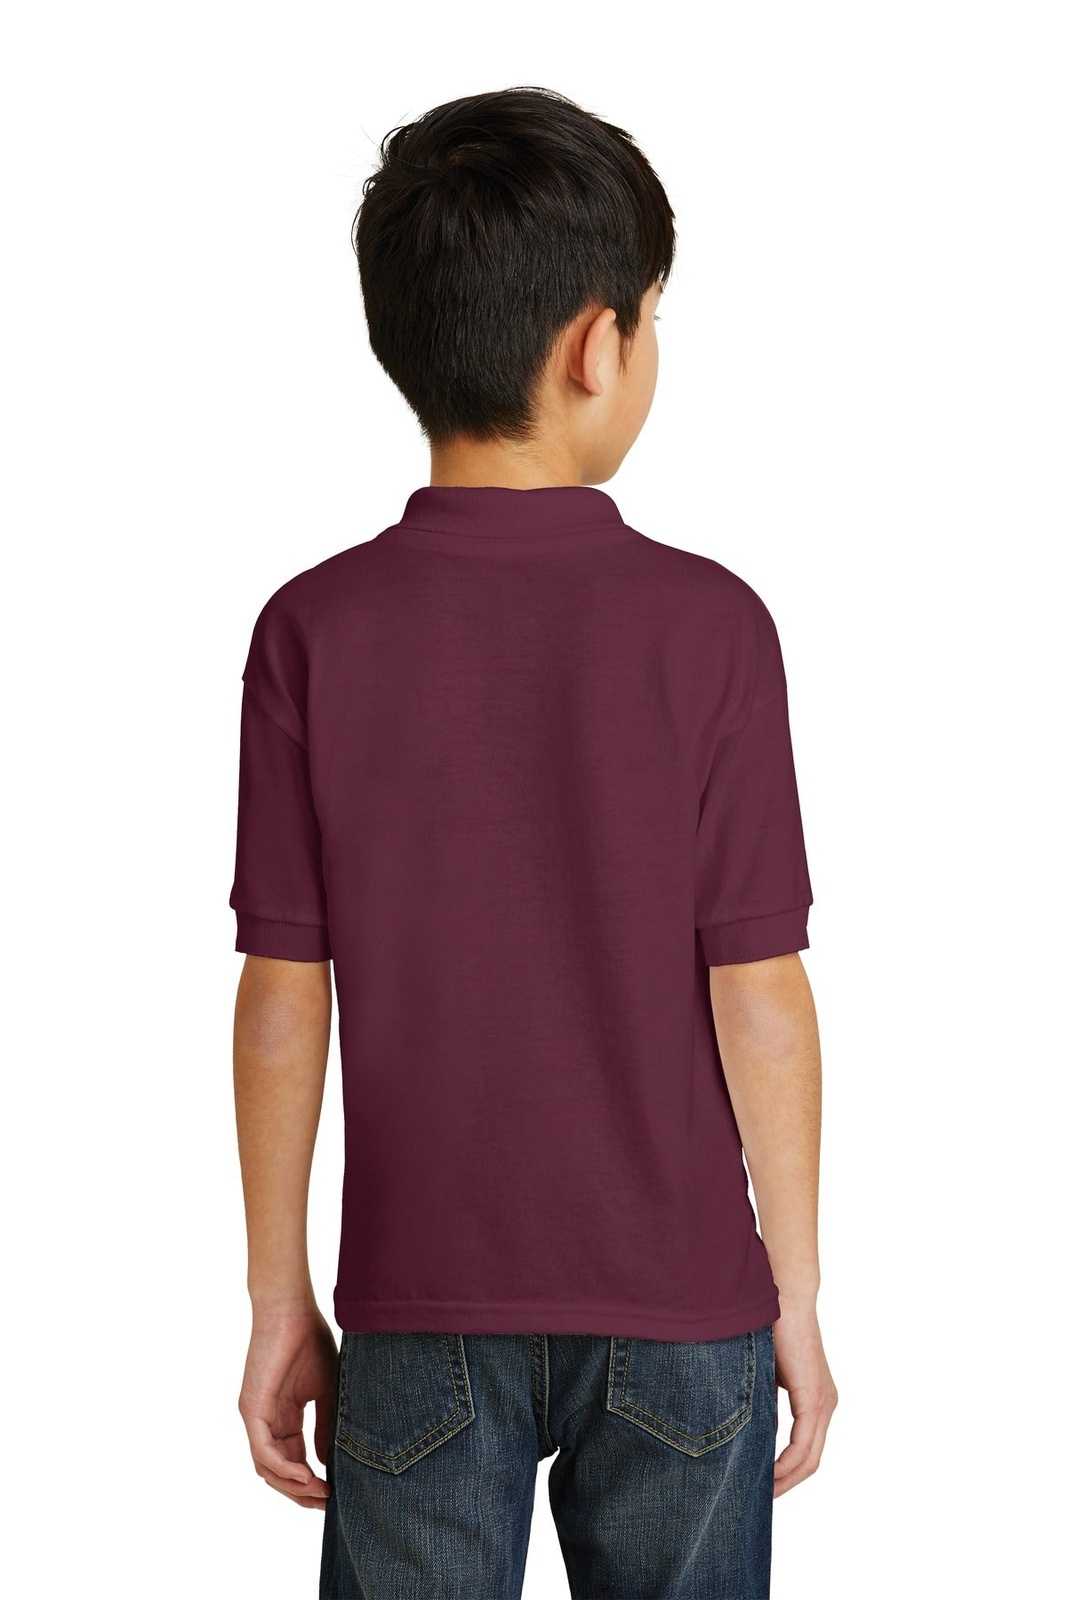 Gildan 8800B Youth Dryblend 6-Ounce Jersey Knit Sport Shirt - Maroon - HIT a Double